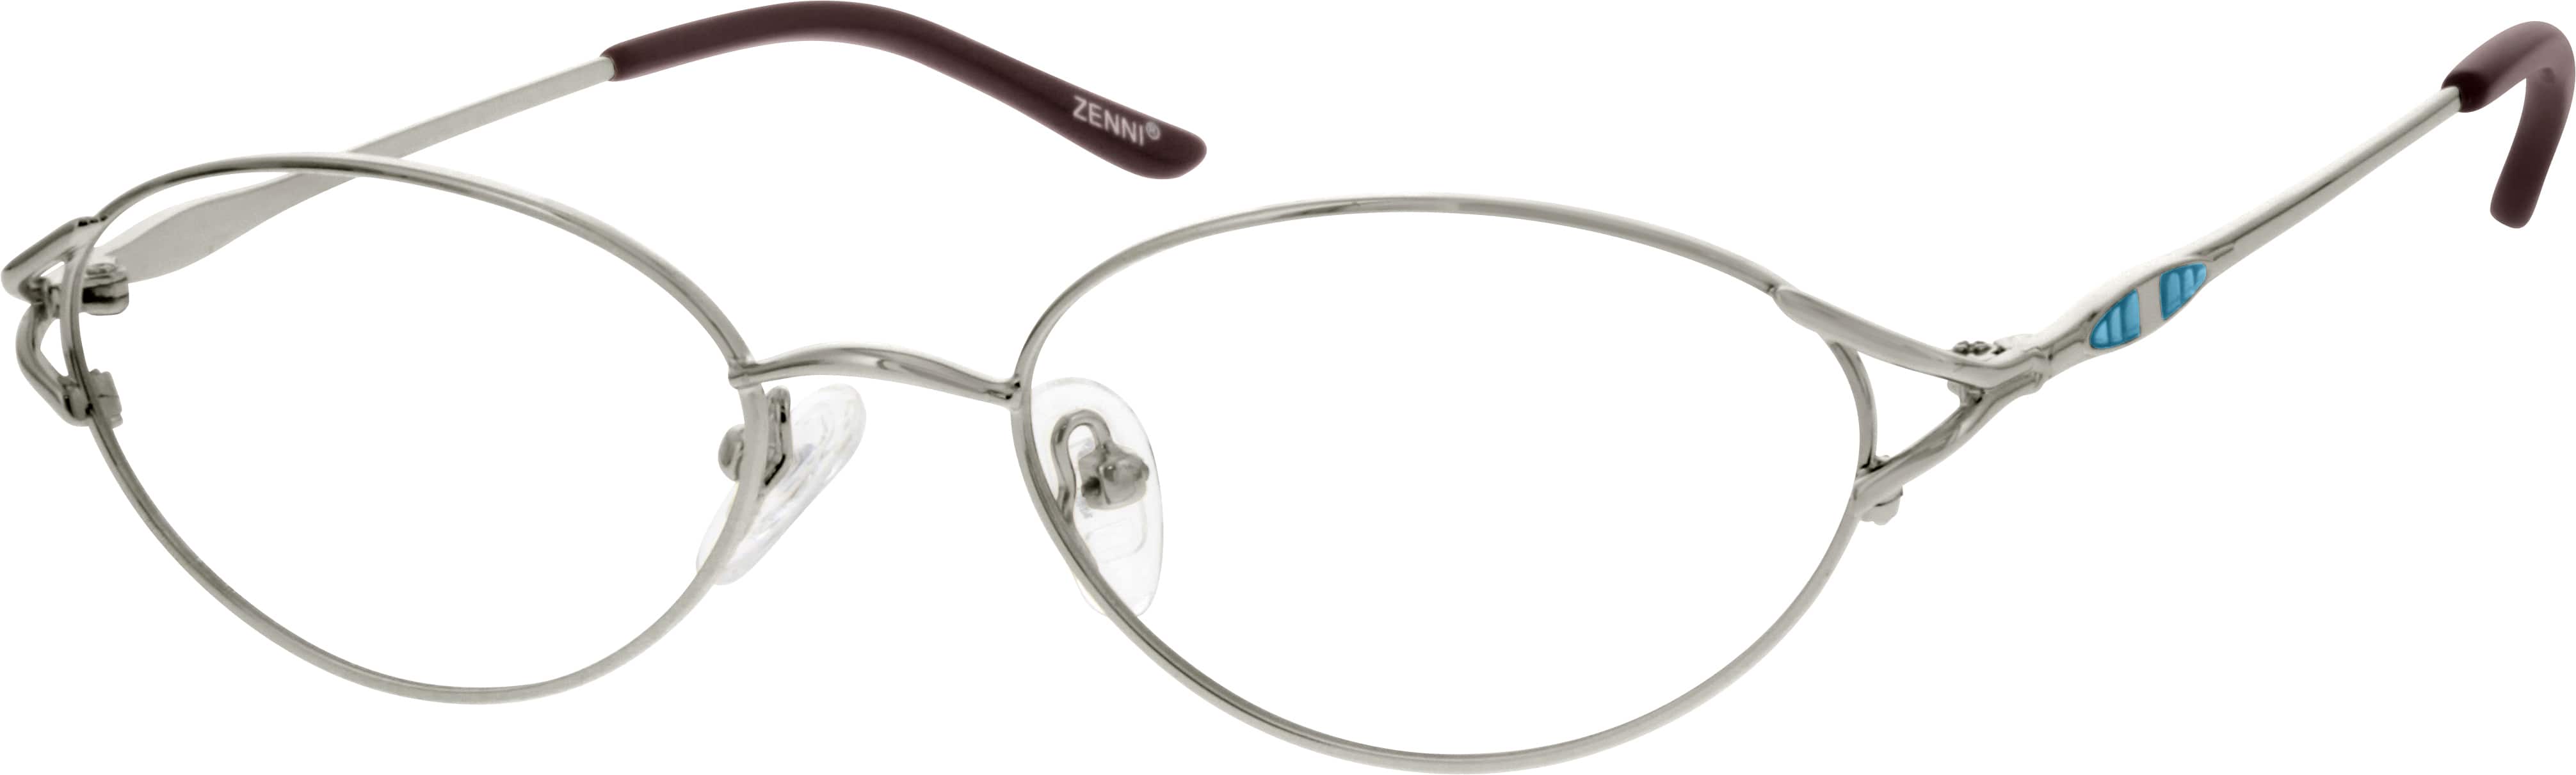 Silver Metal Alloy Full Rim Frame 1531 Zenni Optical Eyeglasses